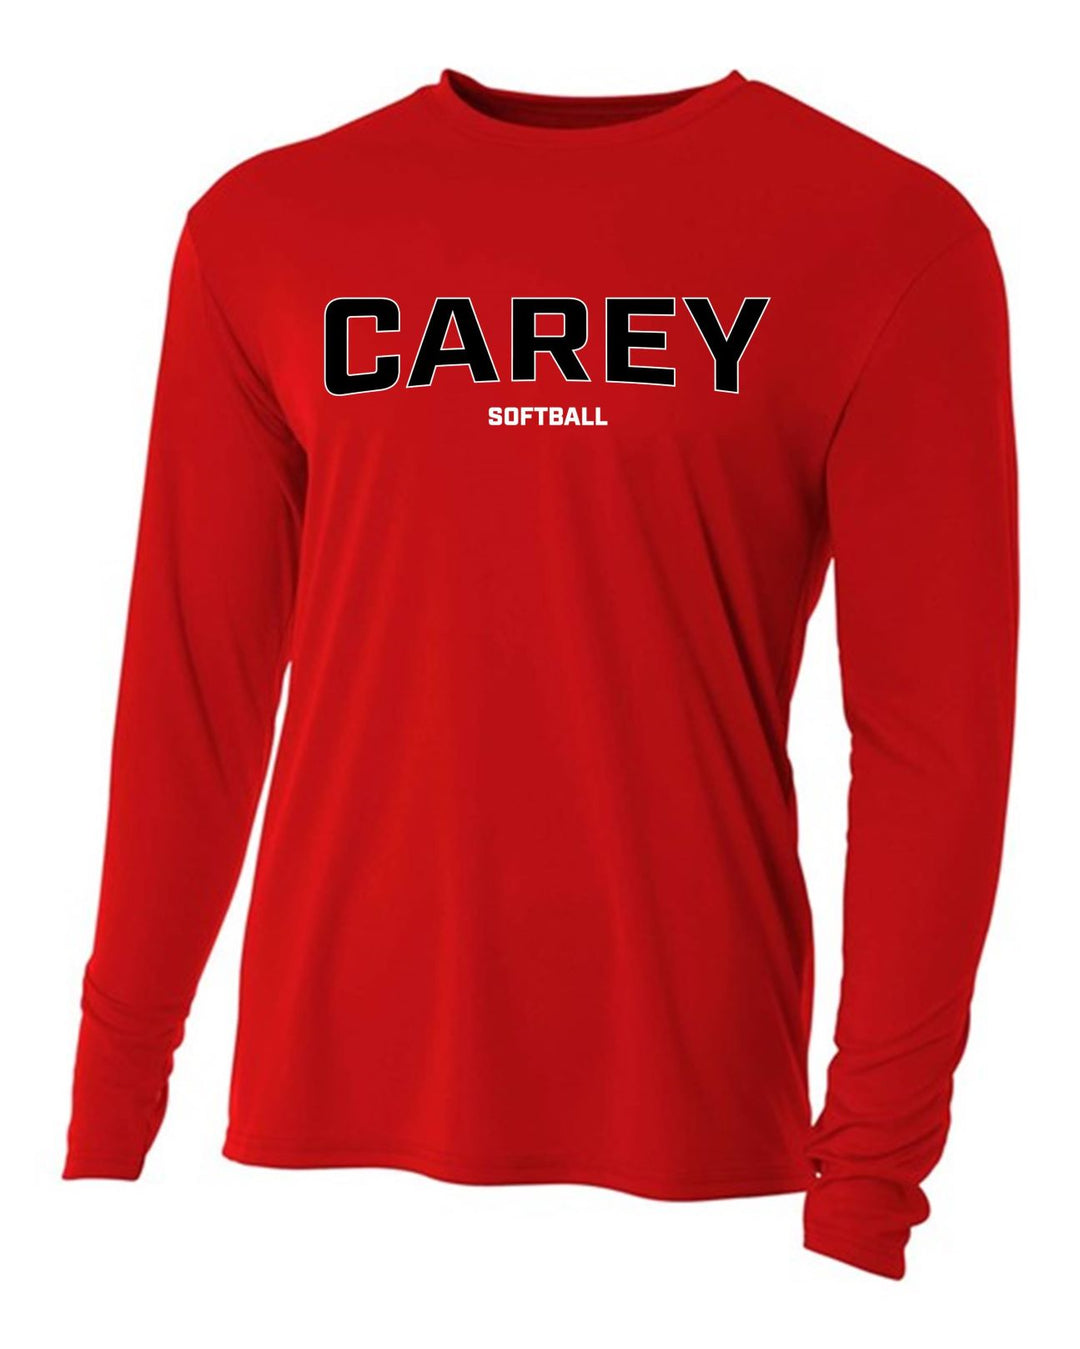 WCU Softball Men's Long-Sleeve Performance Shirt WCU Softball Red CAREY - Third Coast Soccer